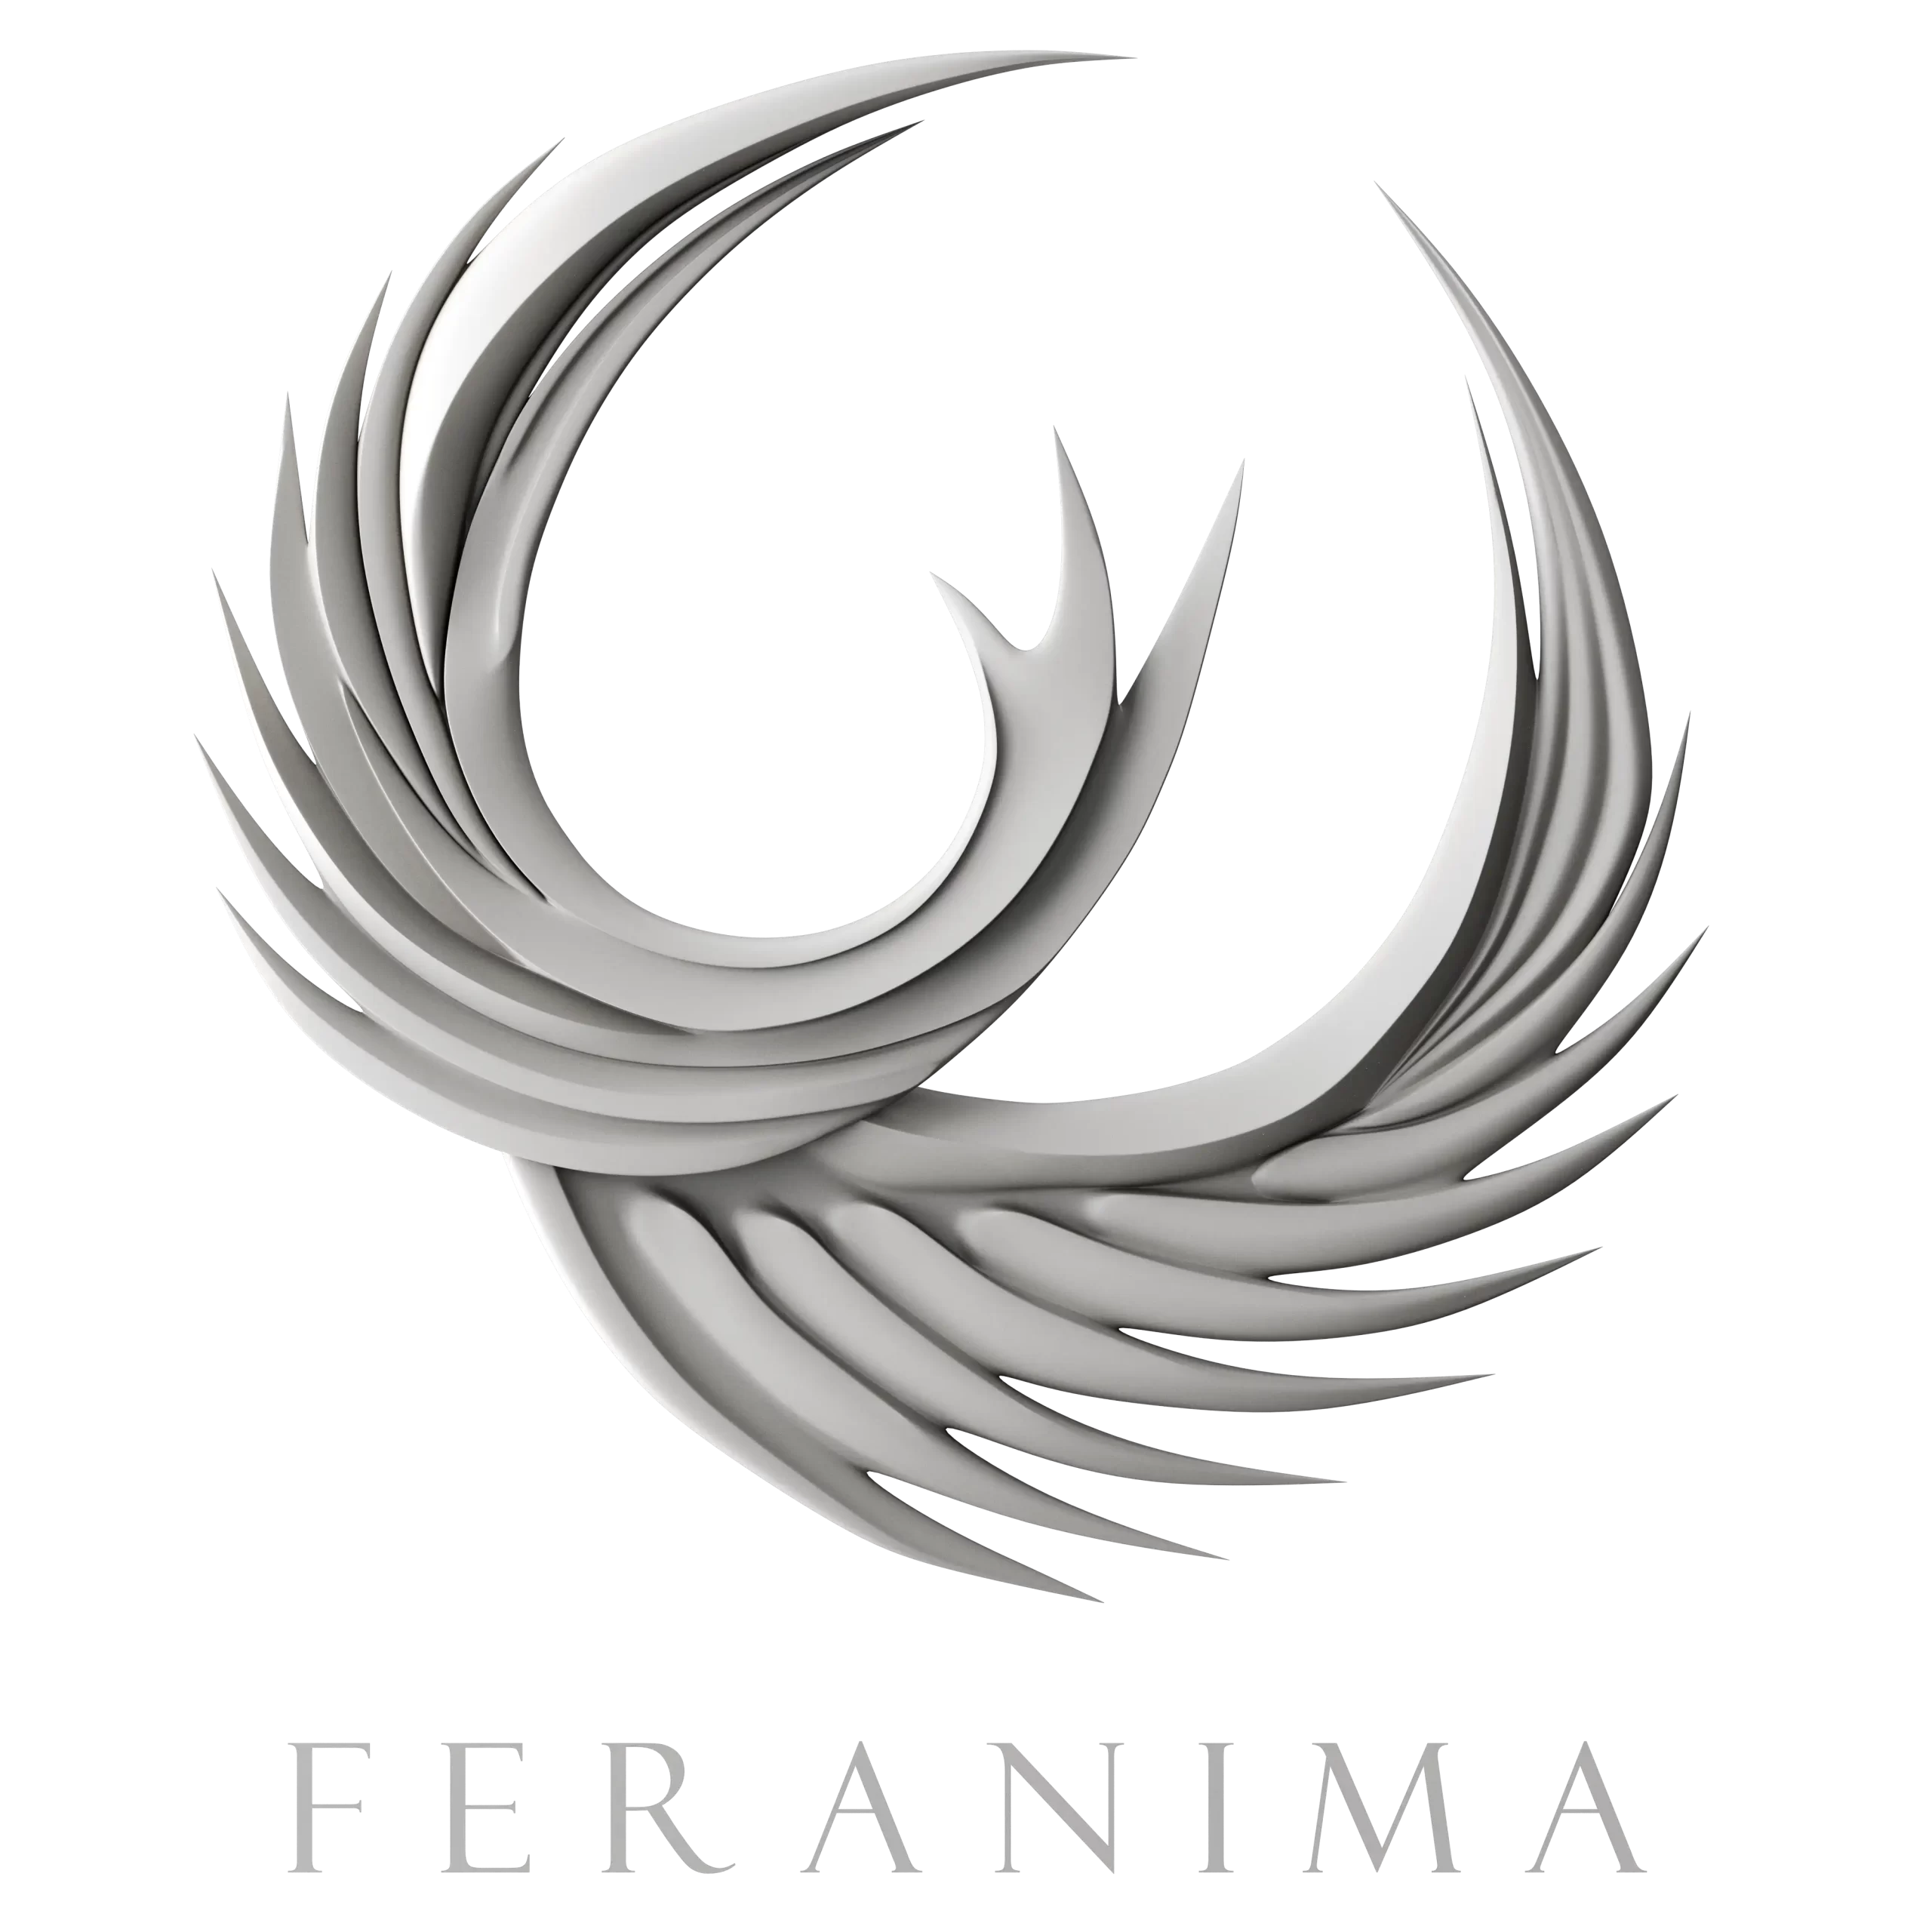 feranima's logo